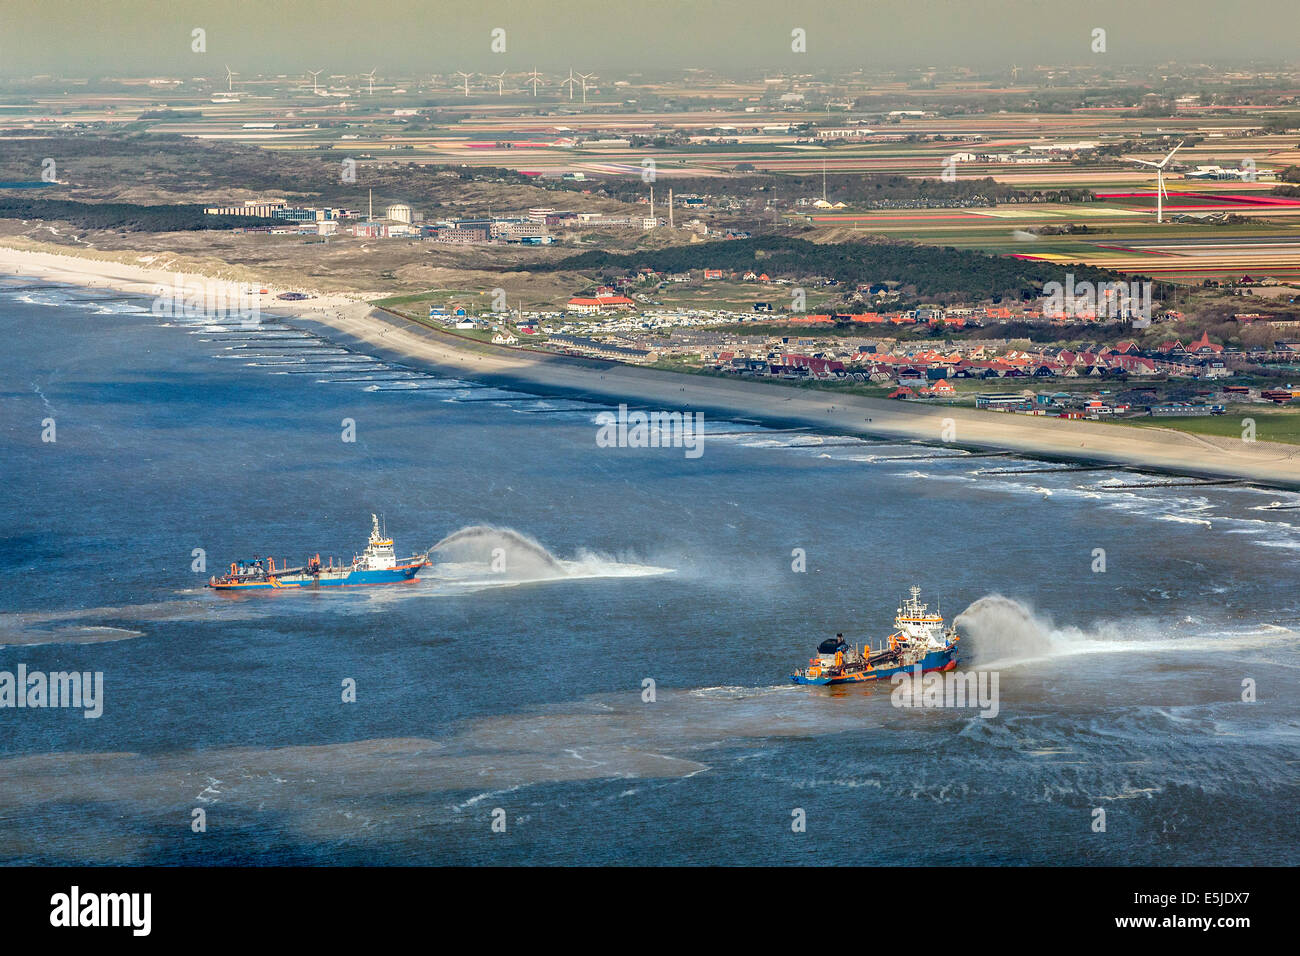 Niederlande, Petten, Stärkung der Deich, Hondsbossche Zeewering. Nachgestellte Absaugung Hopper Bagger Sand ablegen. Luftbild Stockfoto